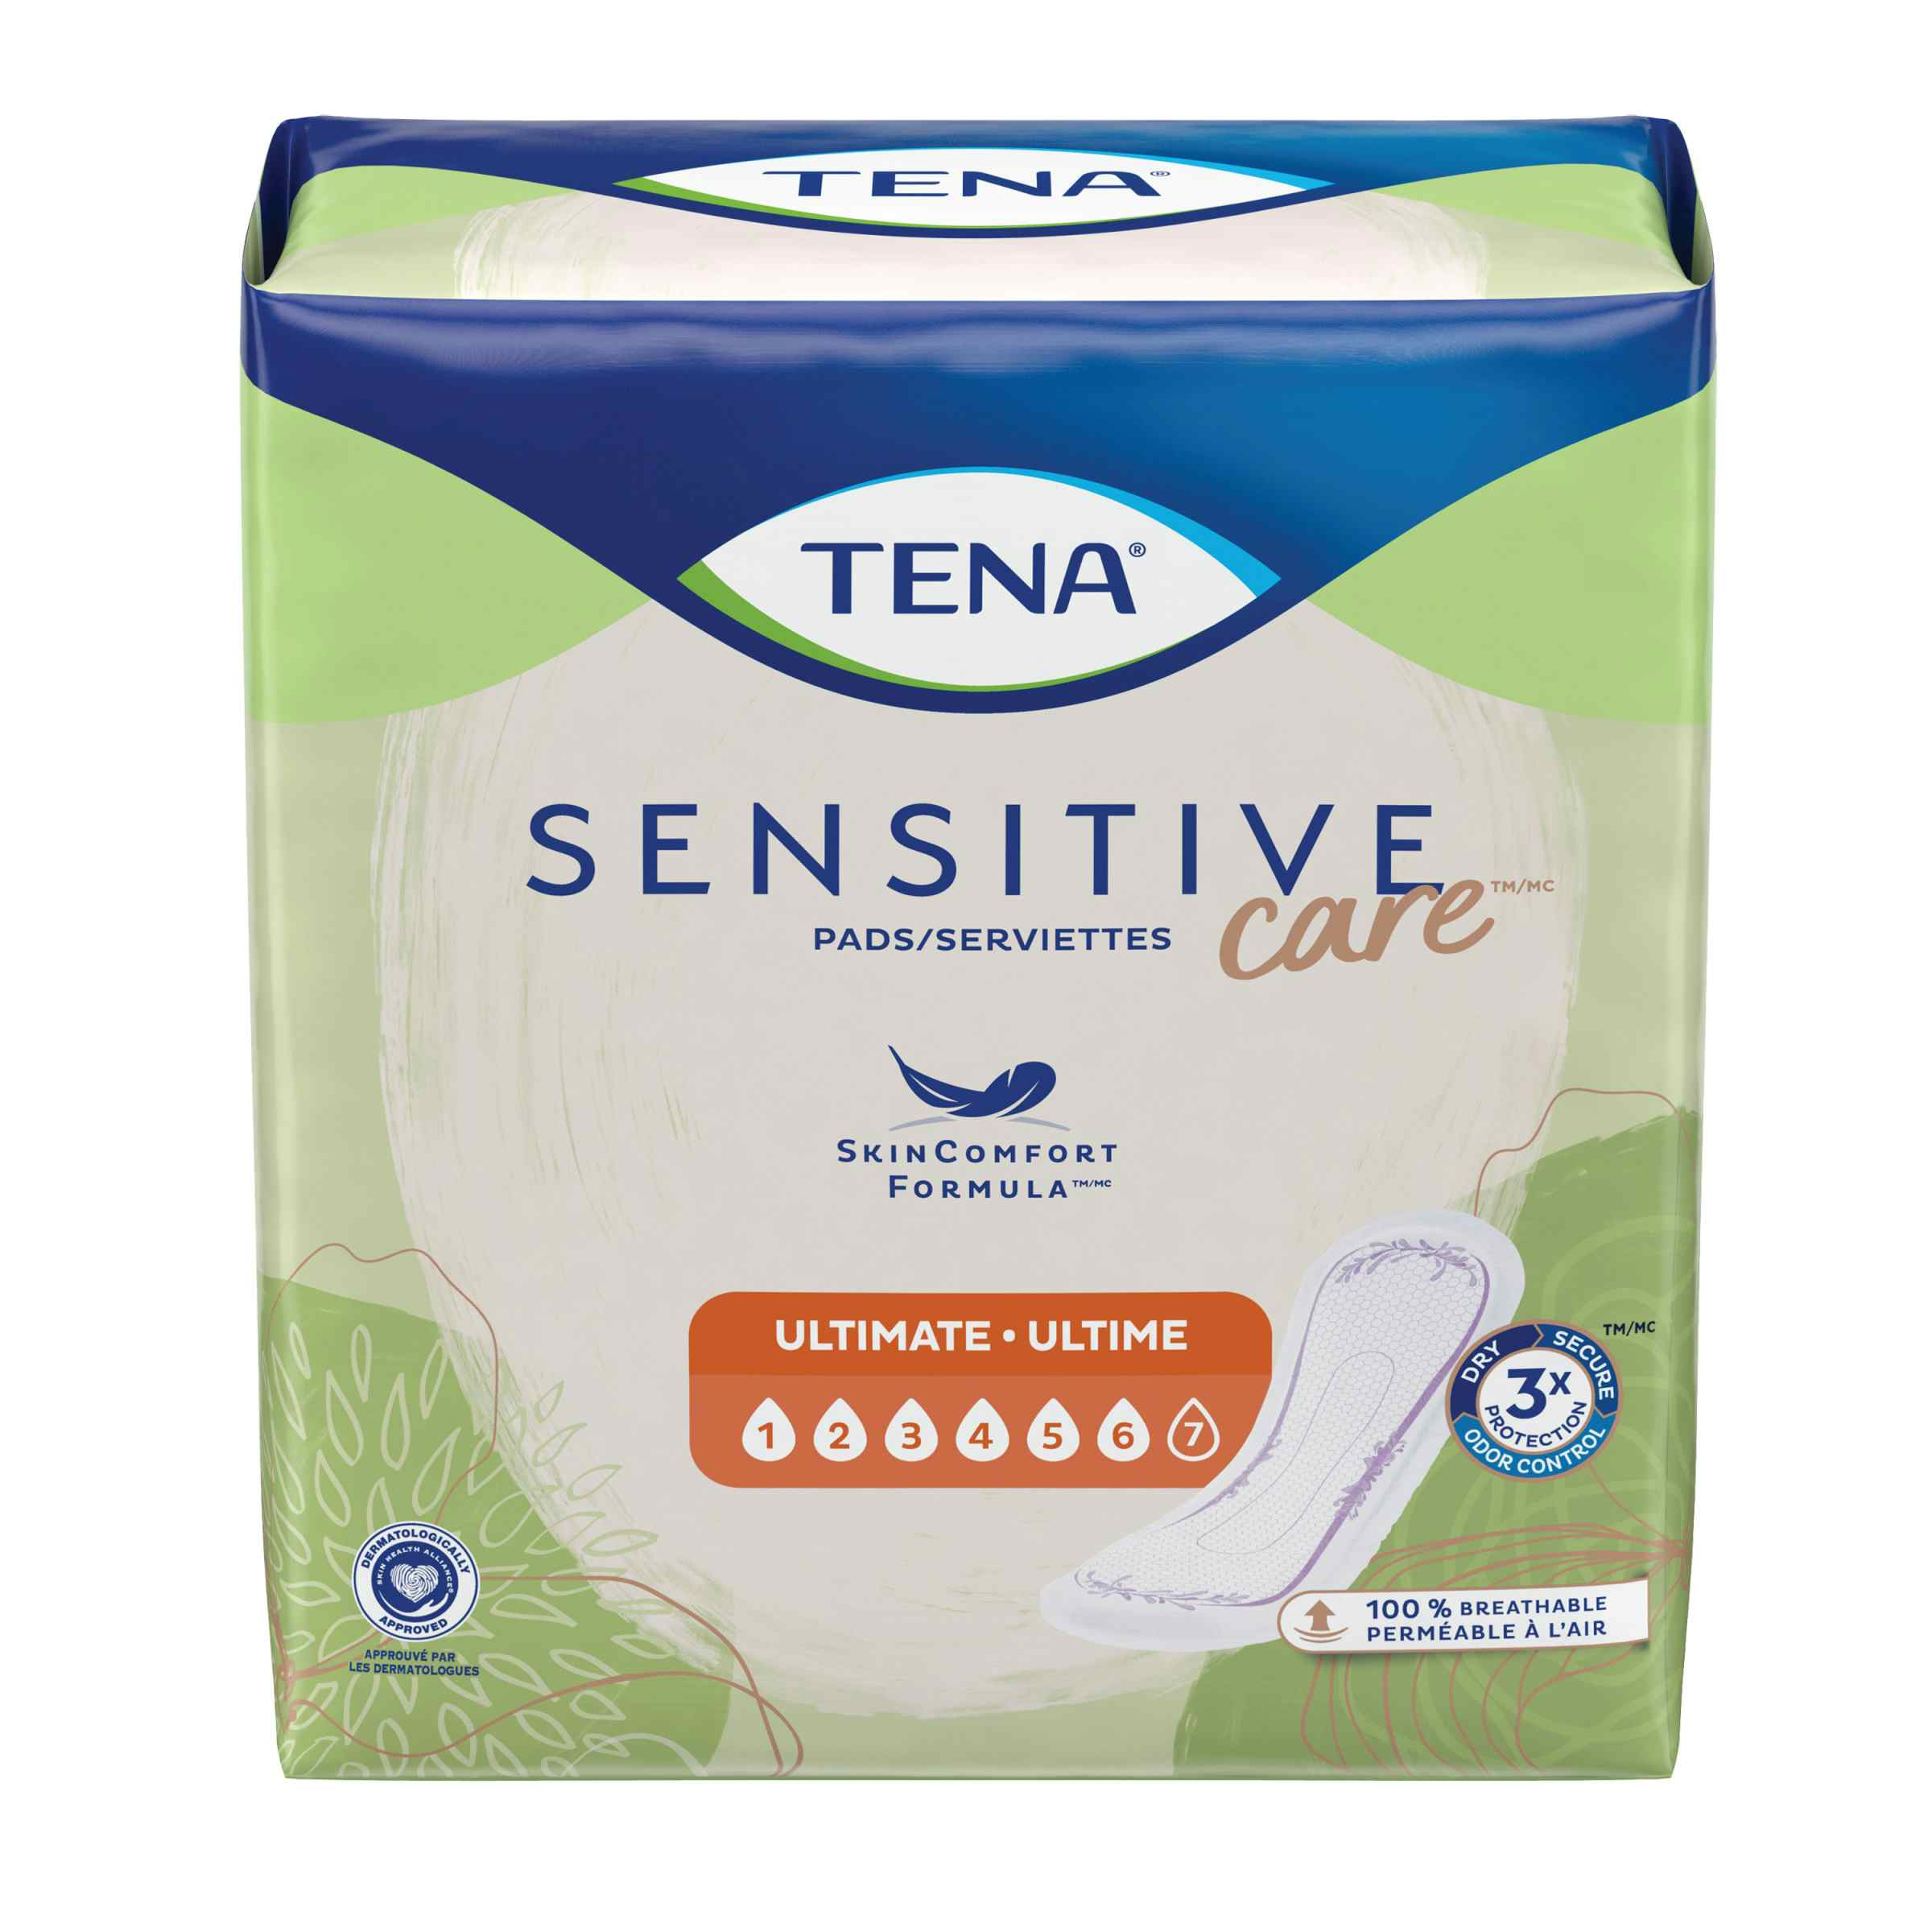 TENA Sensitive Care Ultimate Bladder Pads, Front